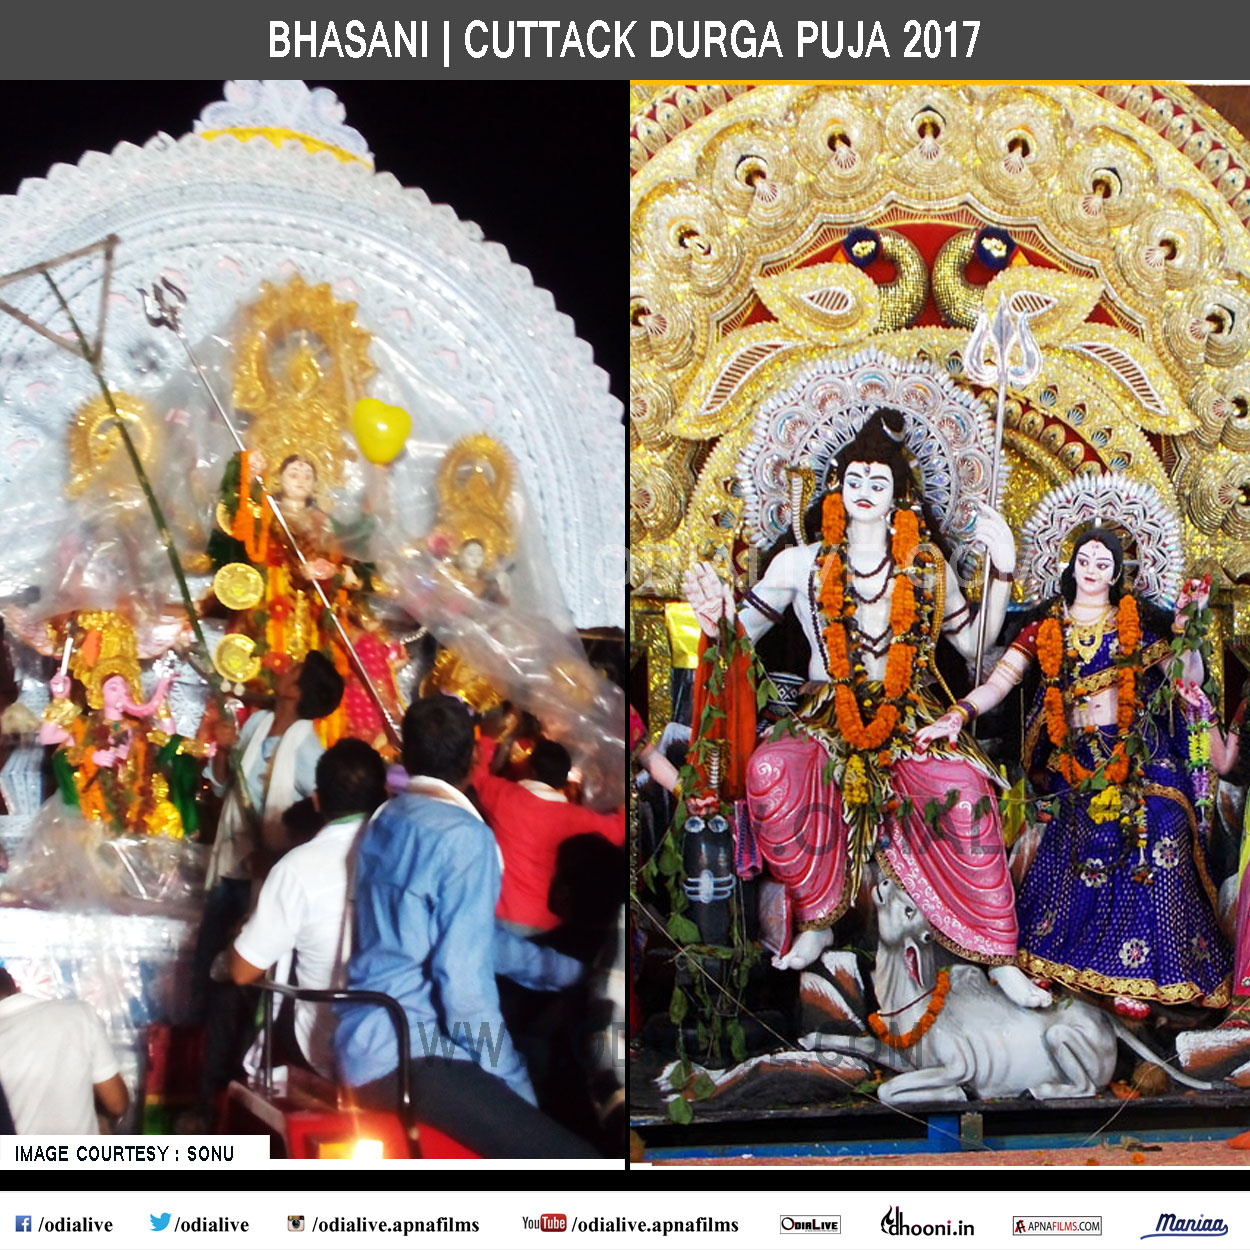 Cuttack Durga Puja Bhasani 